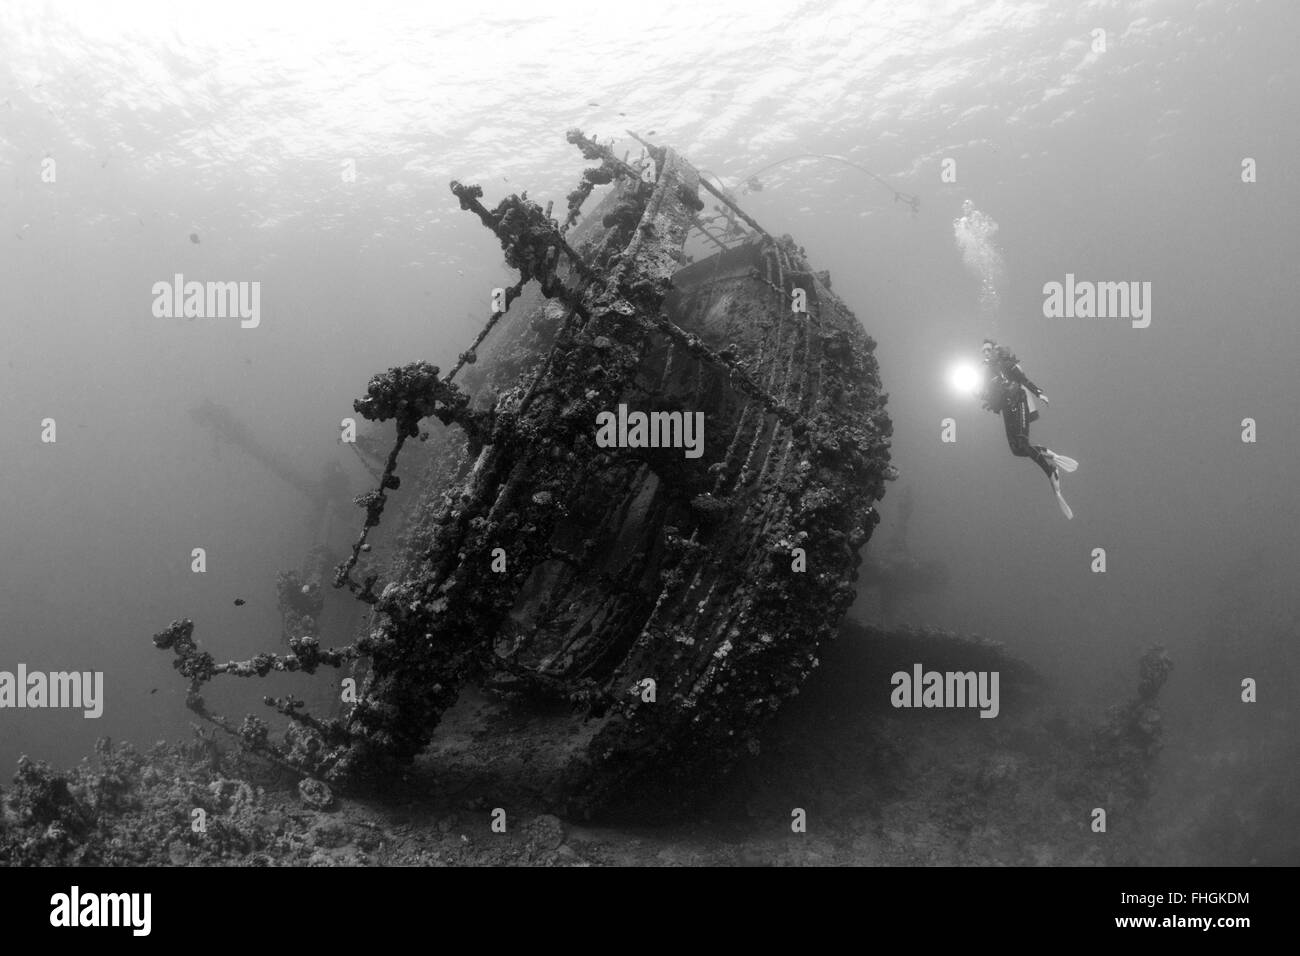 Scuba Diver at Umbria Wreck, Wingate Reef, Red Sea, Sudan Stock Photo